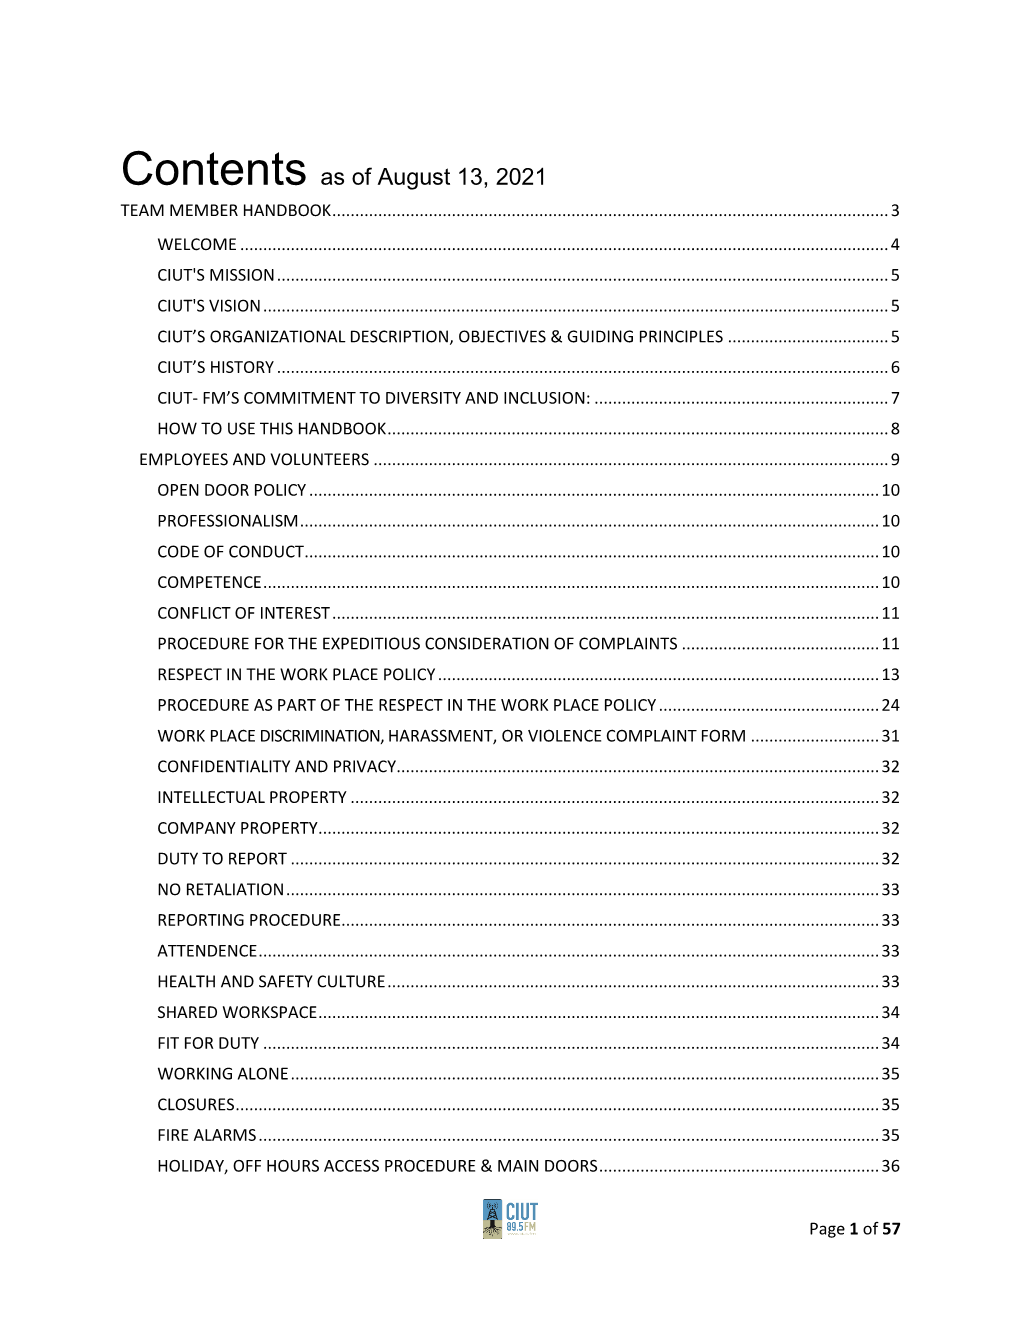 Contents As of August 13, 2021 TEAM MEMBER HANDBOOK